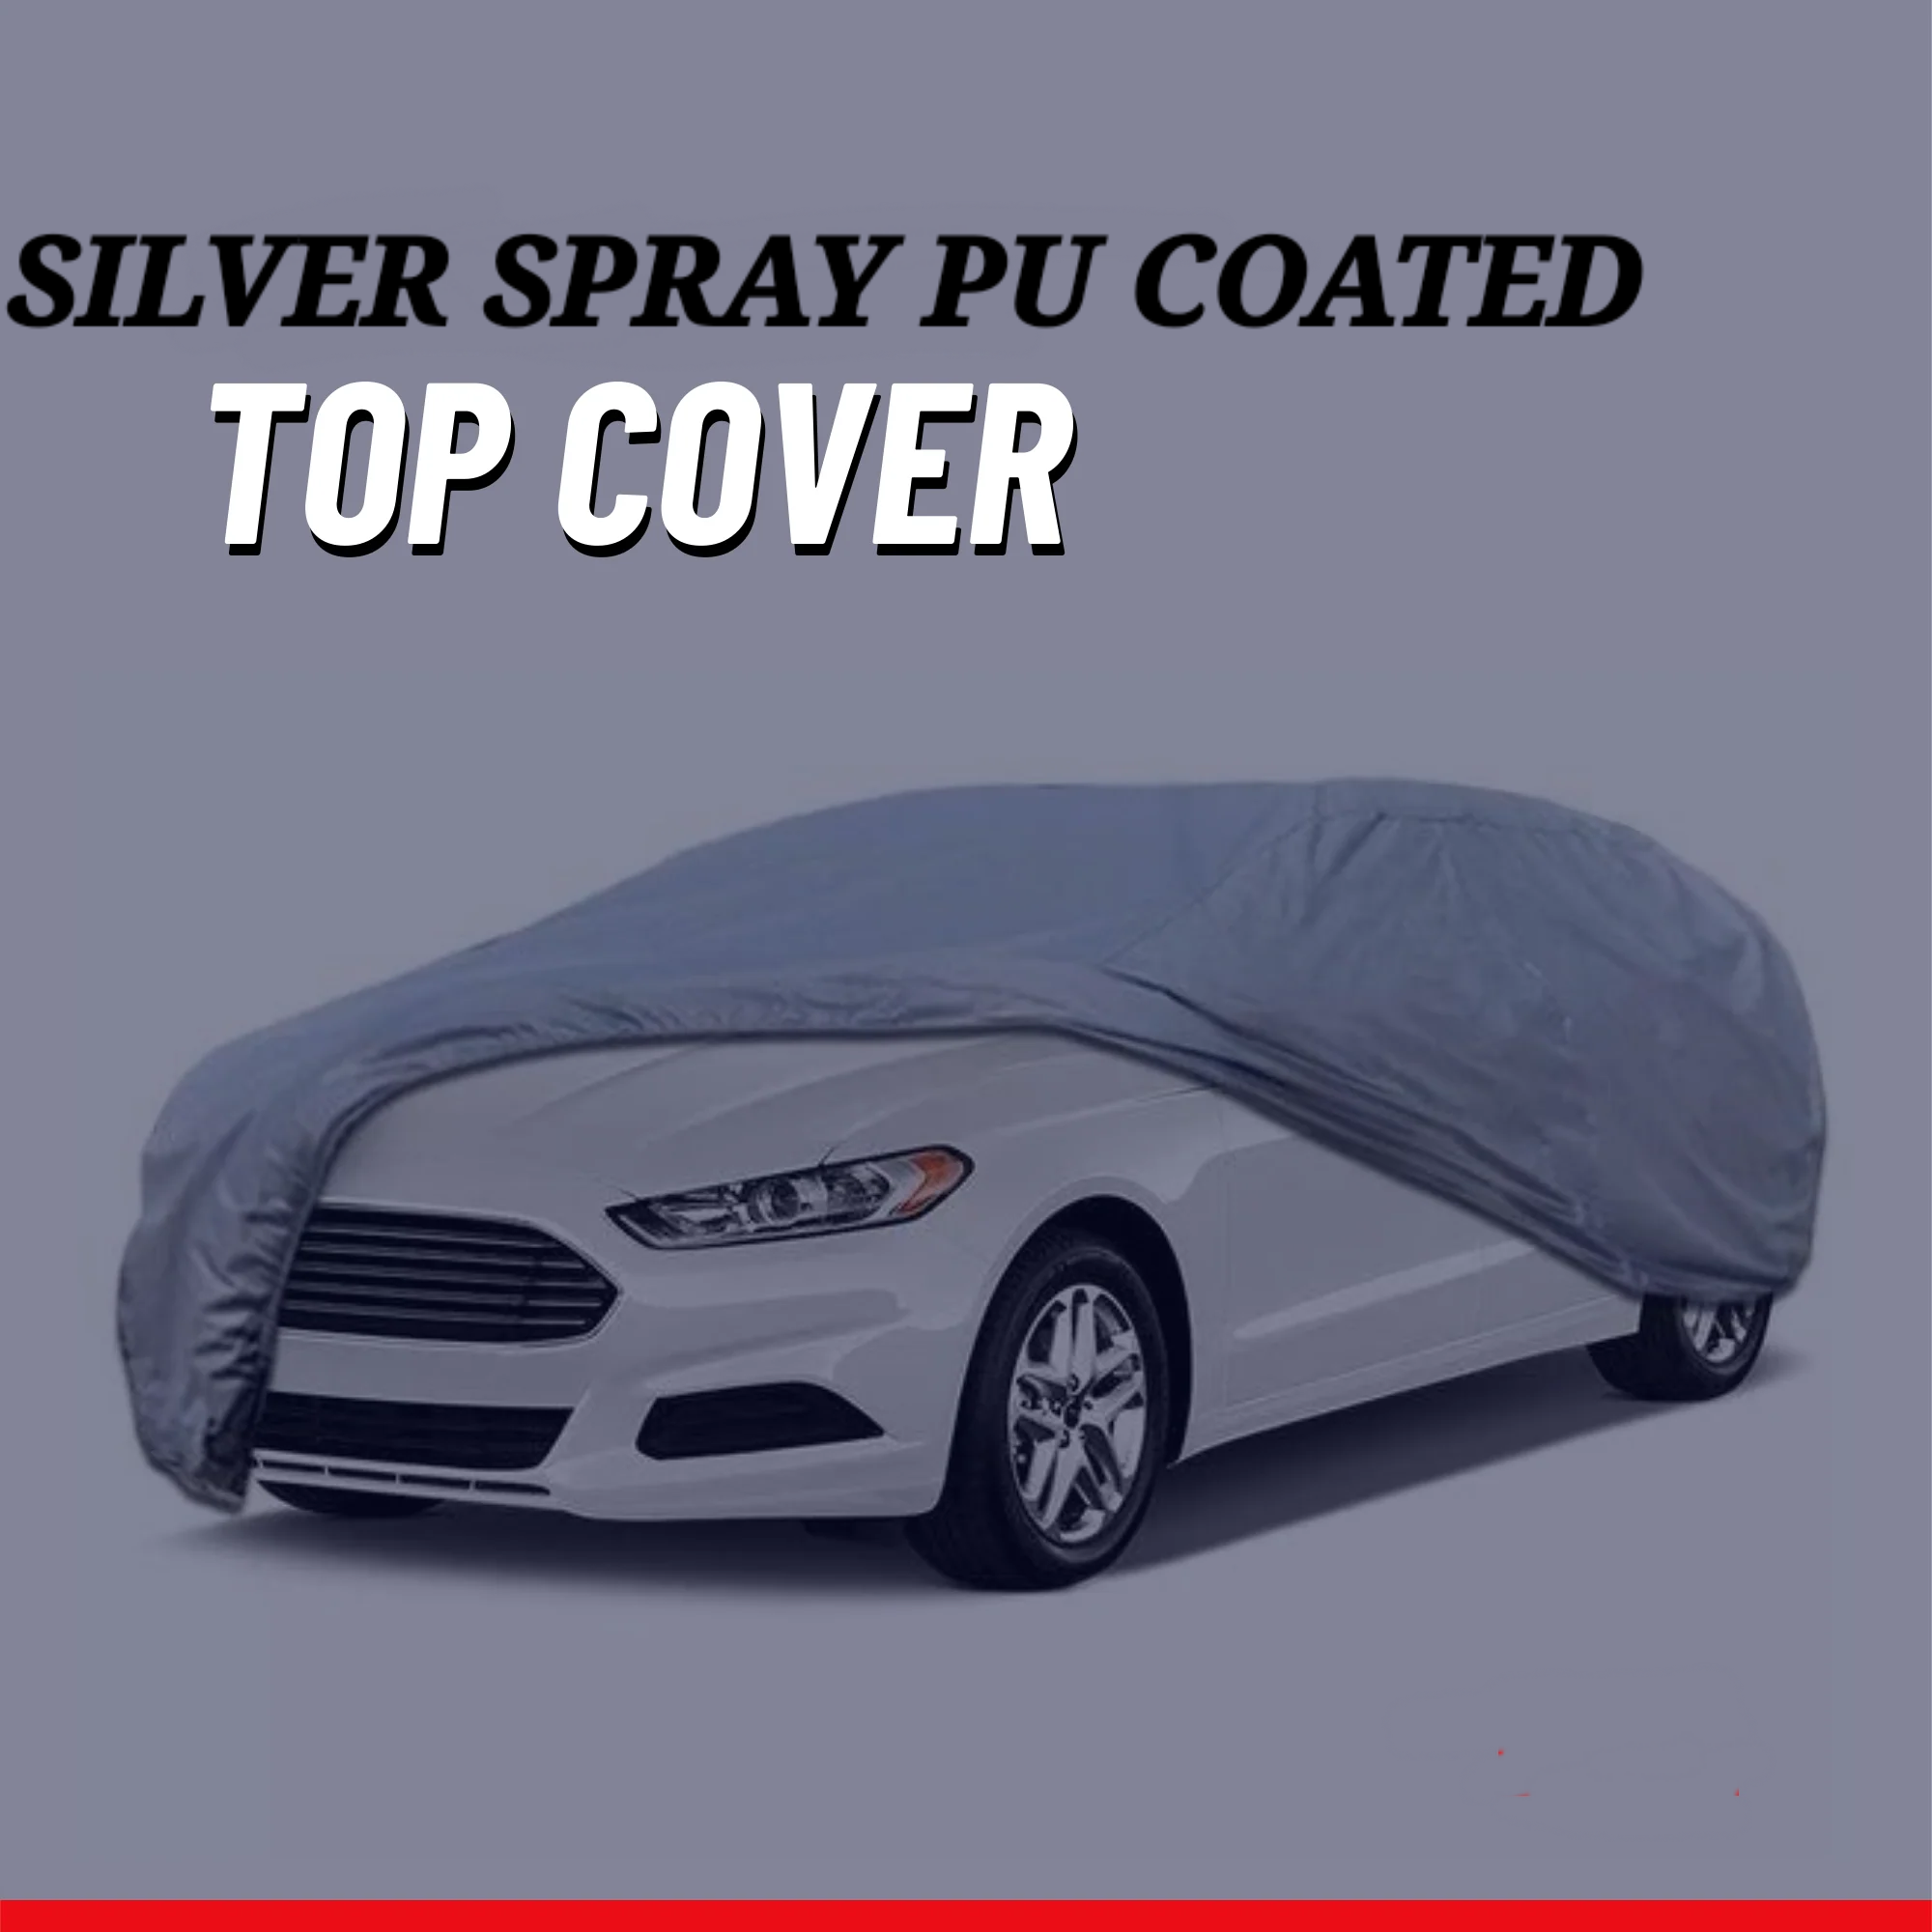 Toyota Revo 2016-2022 Car Top Cover - Waterproof & Dustproof Silver Spray Coated + Free Bag